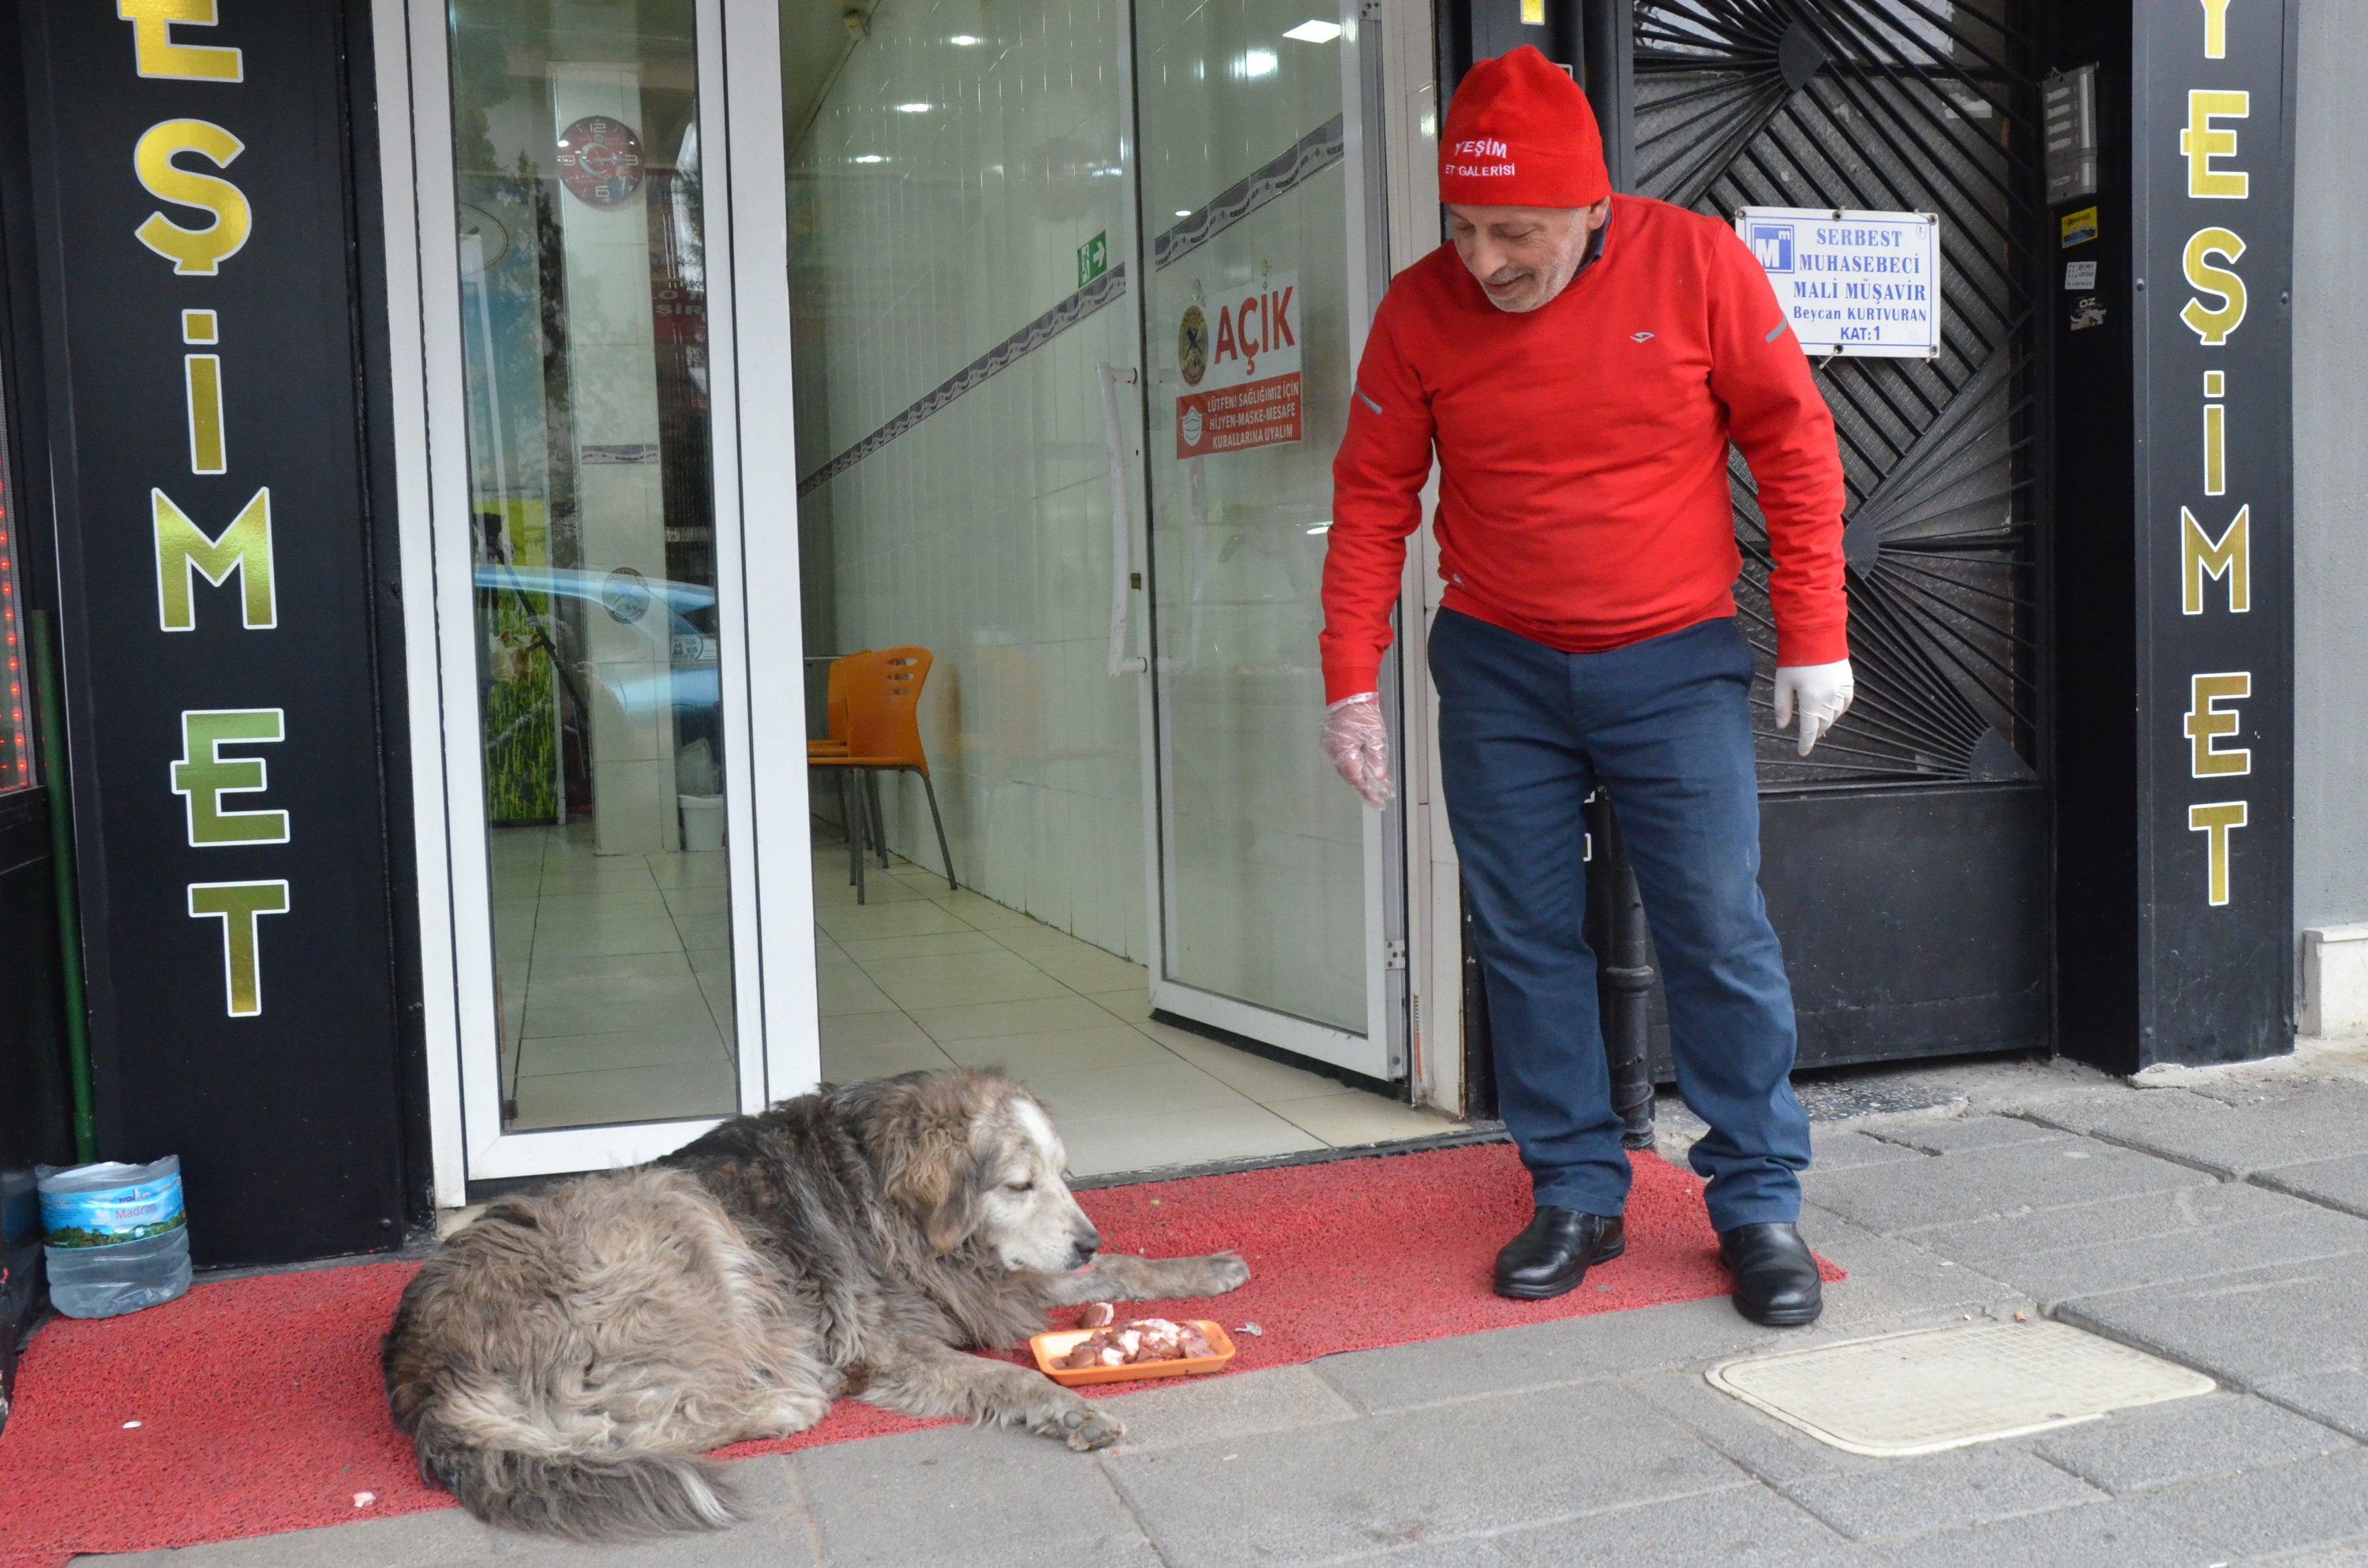 Tukang jagal melihat anjing liar memakan makanan yang dia berikan di luar tokonya, di Manisa, Turki barat, 14 Maret 2022. (AA Photo)